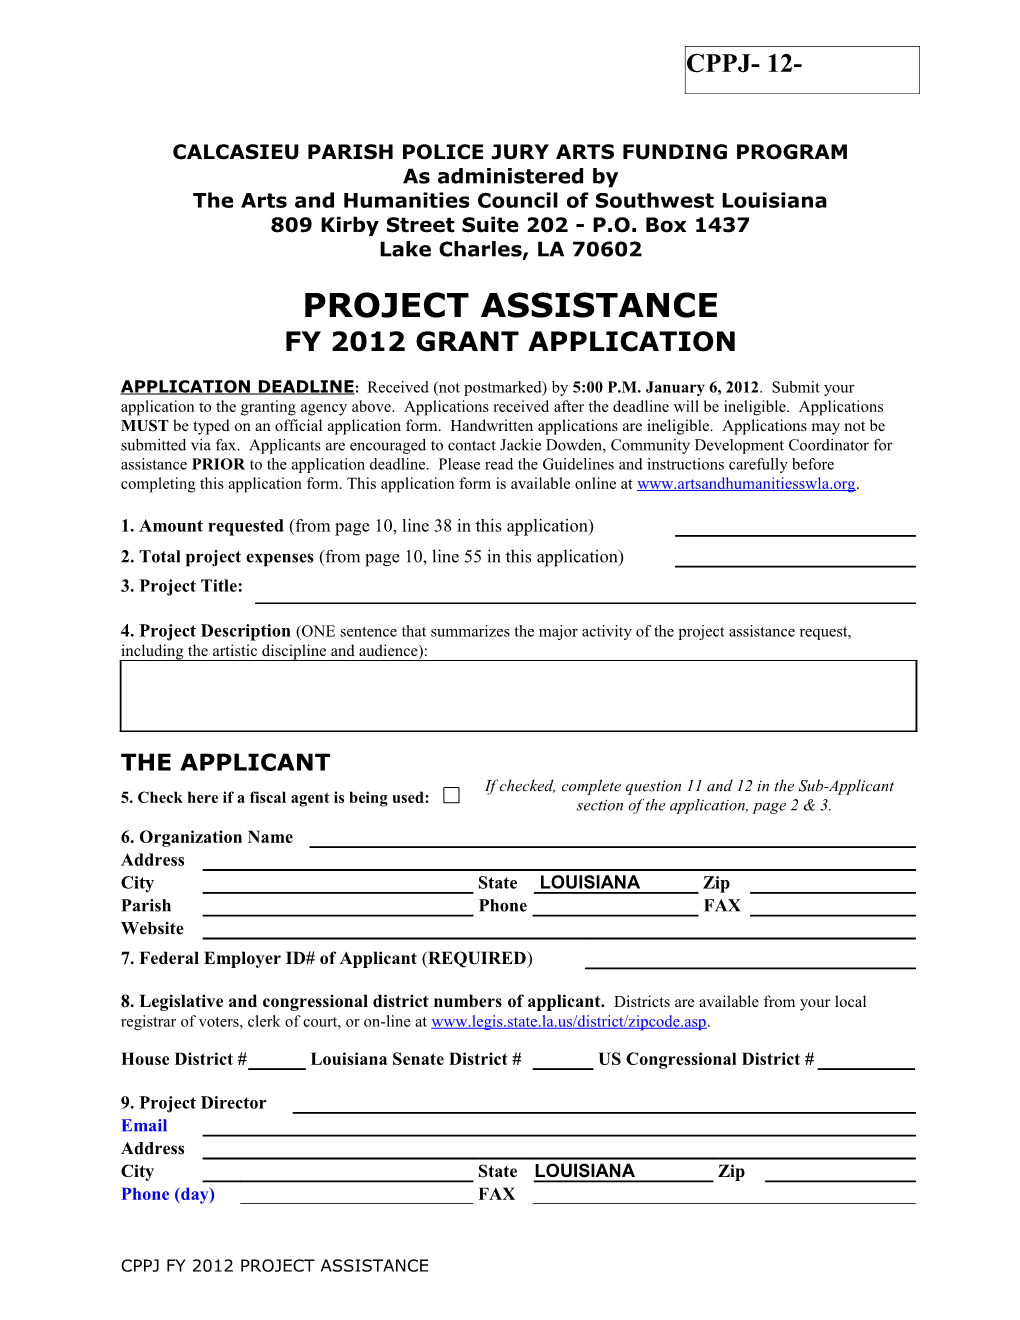 DAF Program - Project Assistance Grant Application